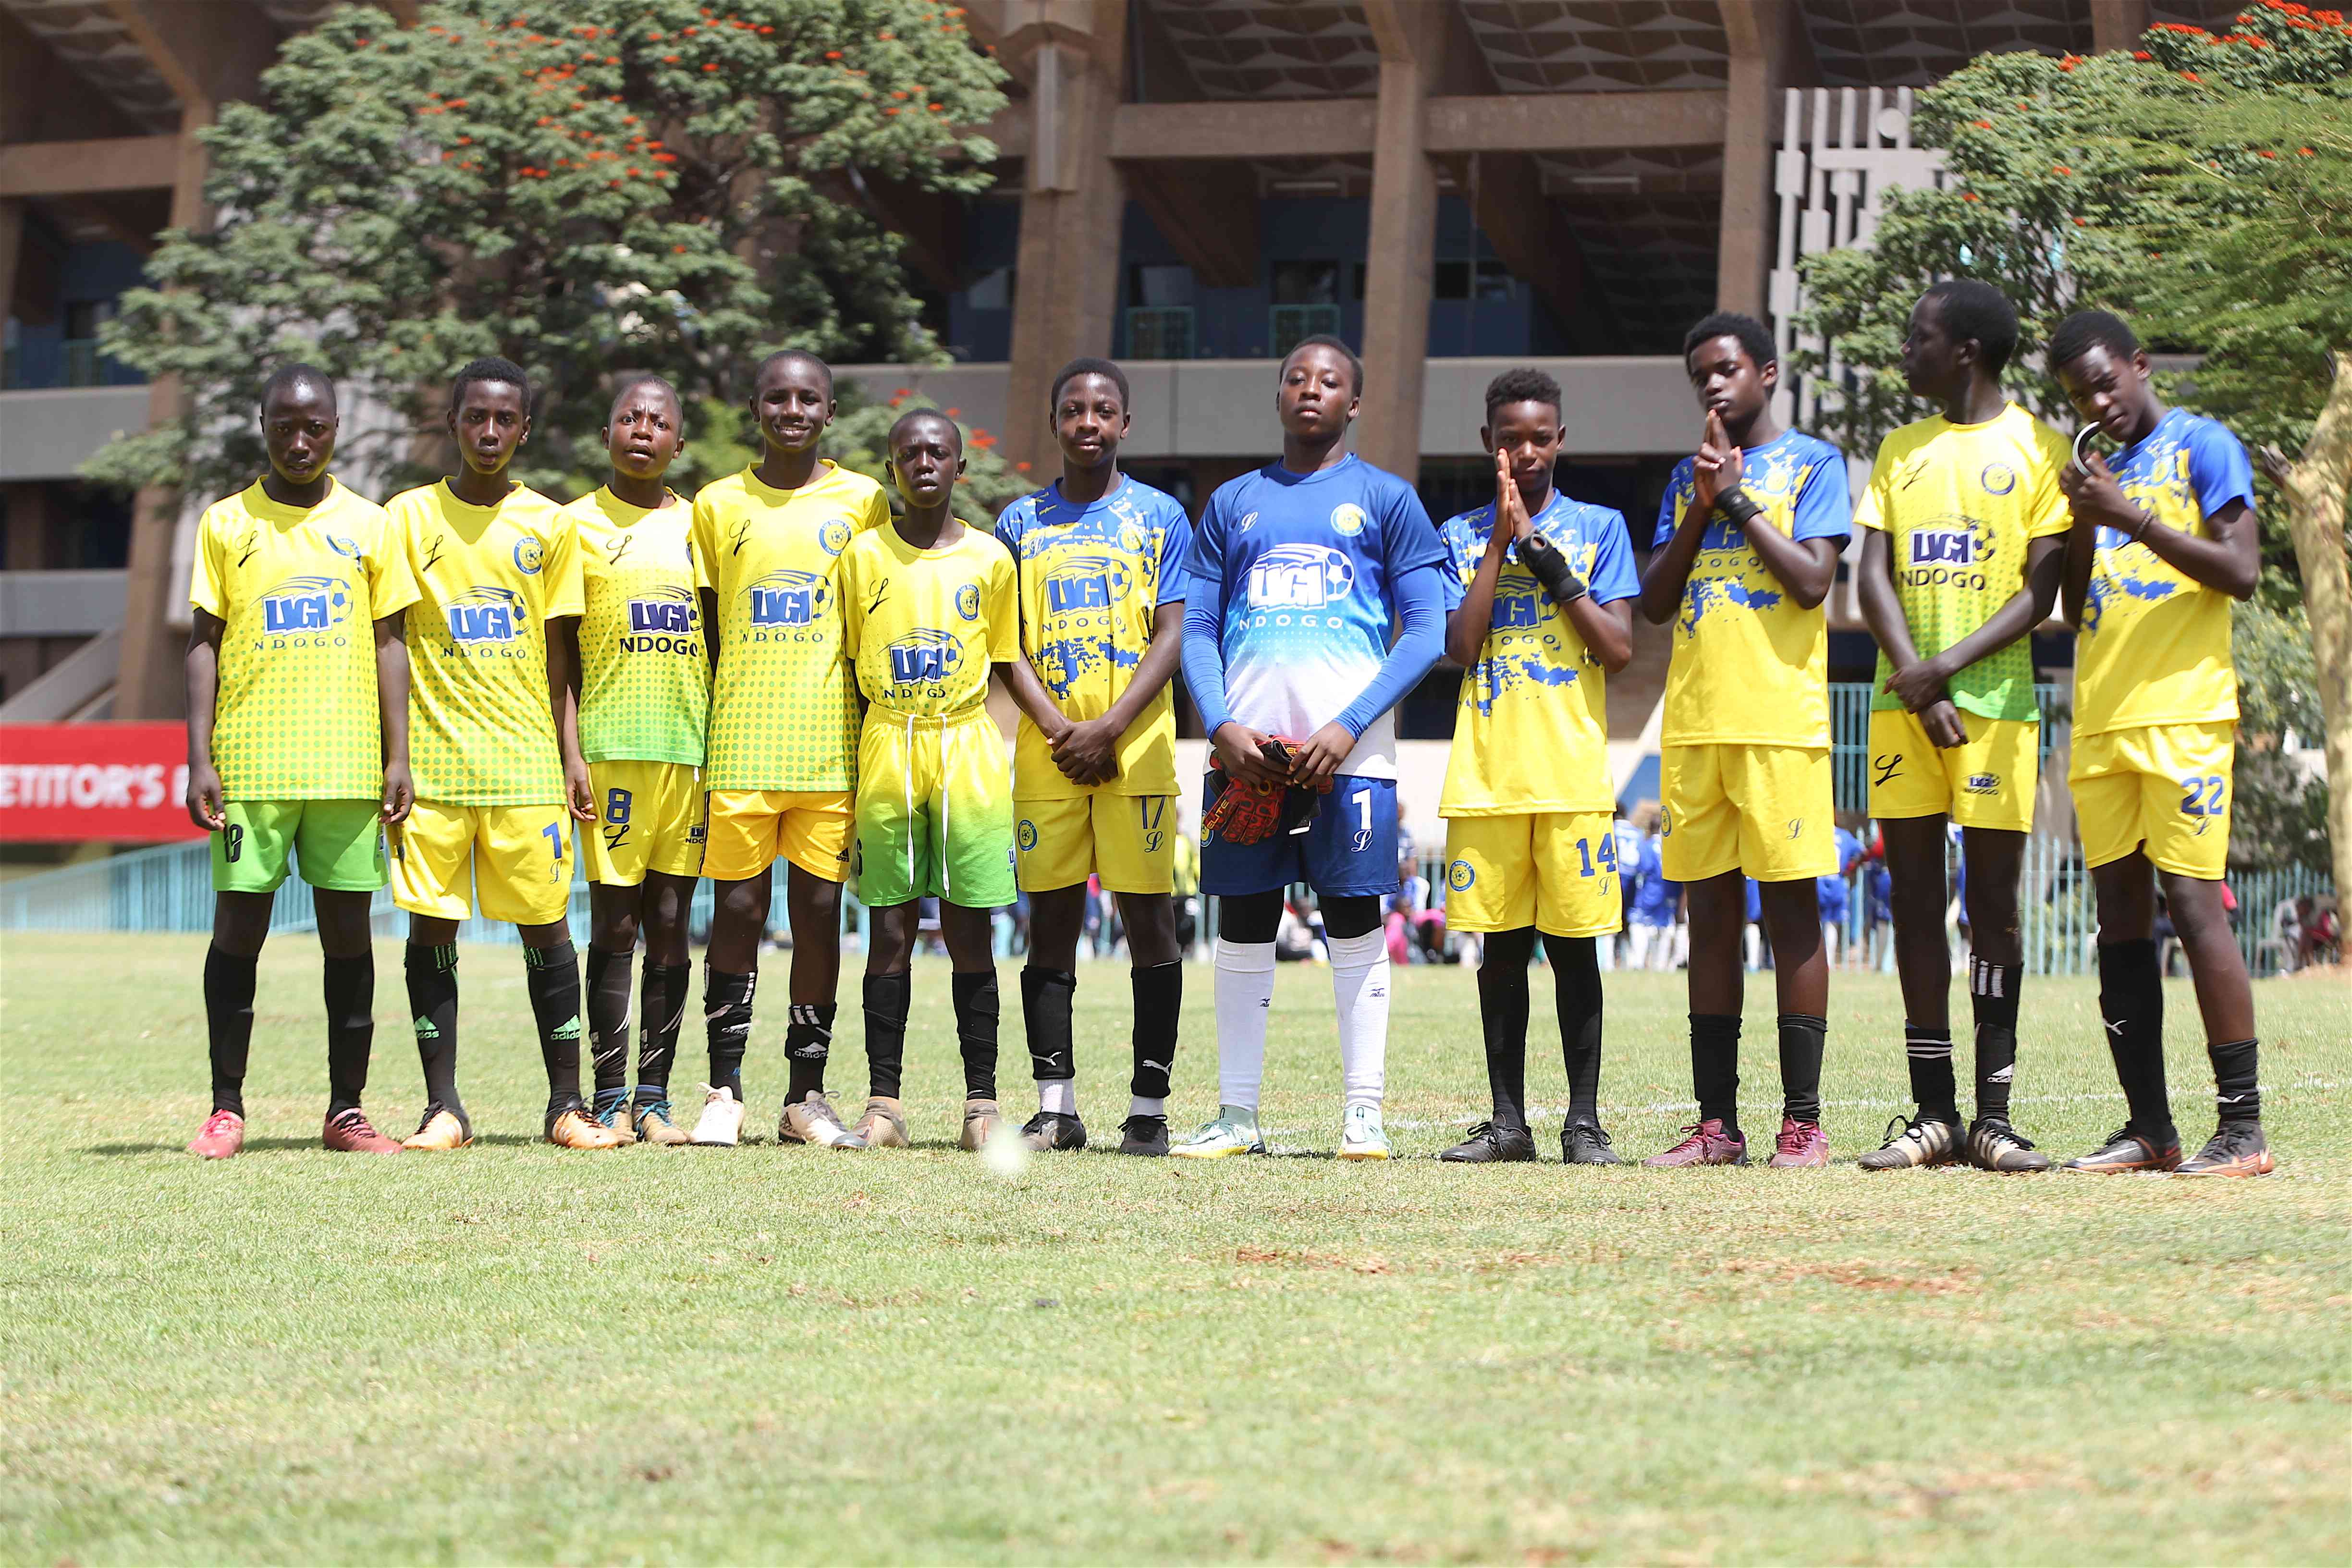 FKF Elite Youth League kicks off at Kasarani